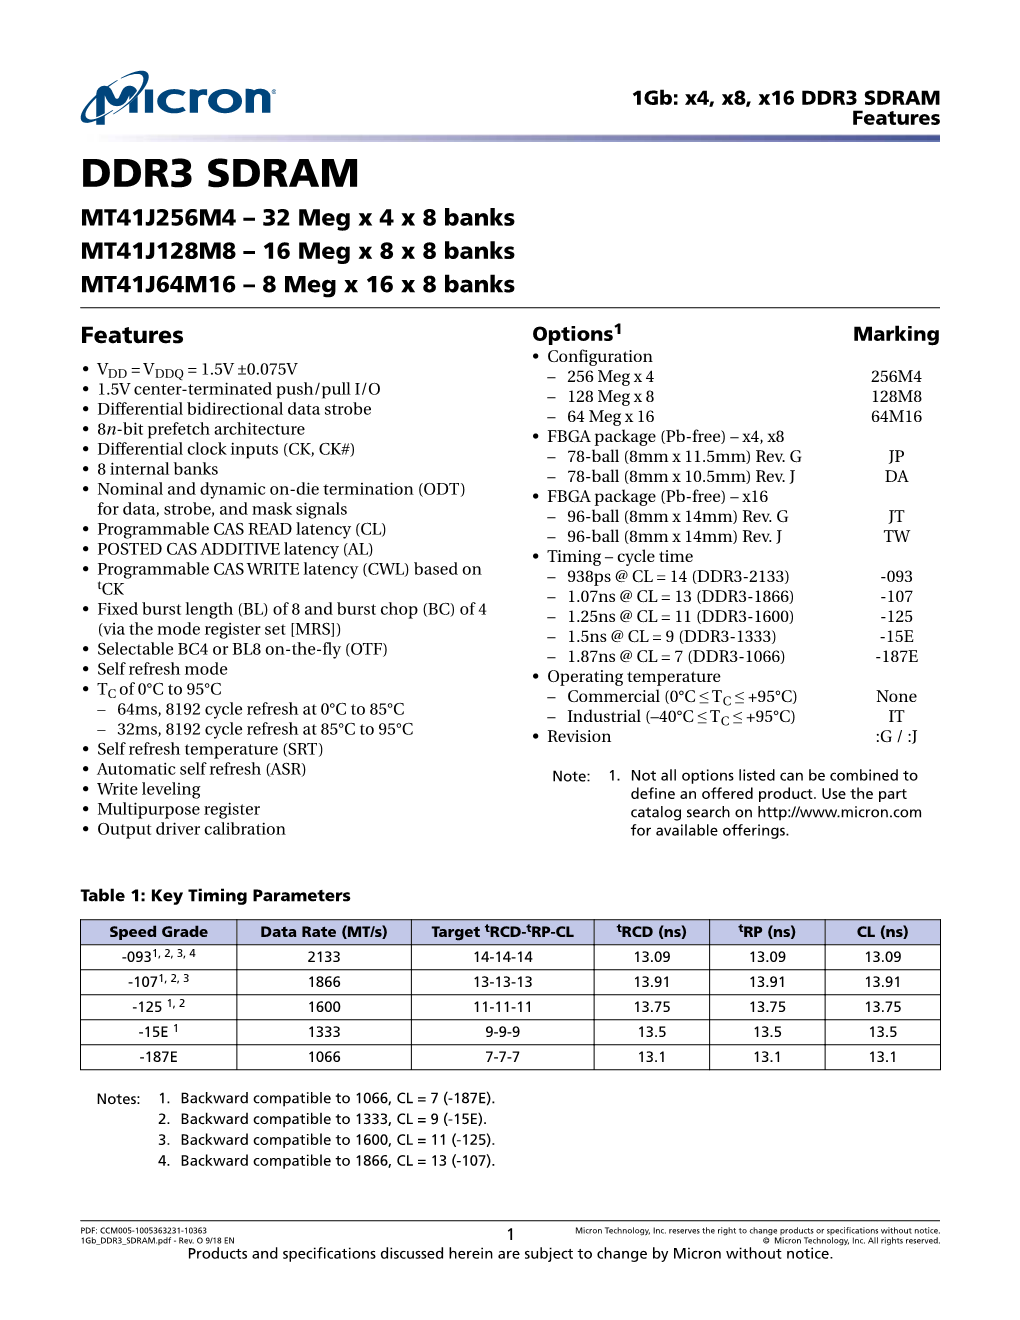 DDR3 SDRAM Features DDR3 SDRAM MT41J256M4 – 32 Meg X 4 X 8 Banks MT41J128M8 – 16 Meg X 8 X 8 Banks MT41J64M16 – 8 Meg X 16 X 8 Banks